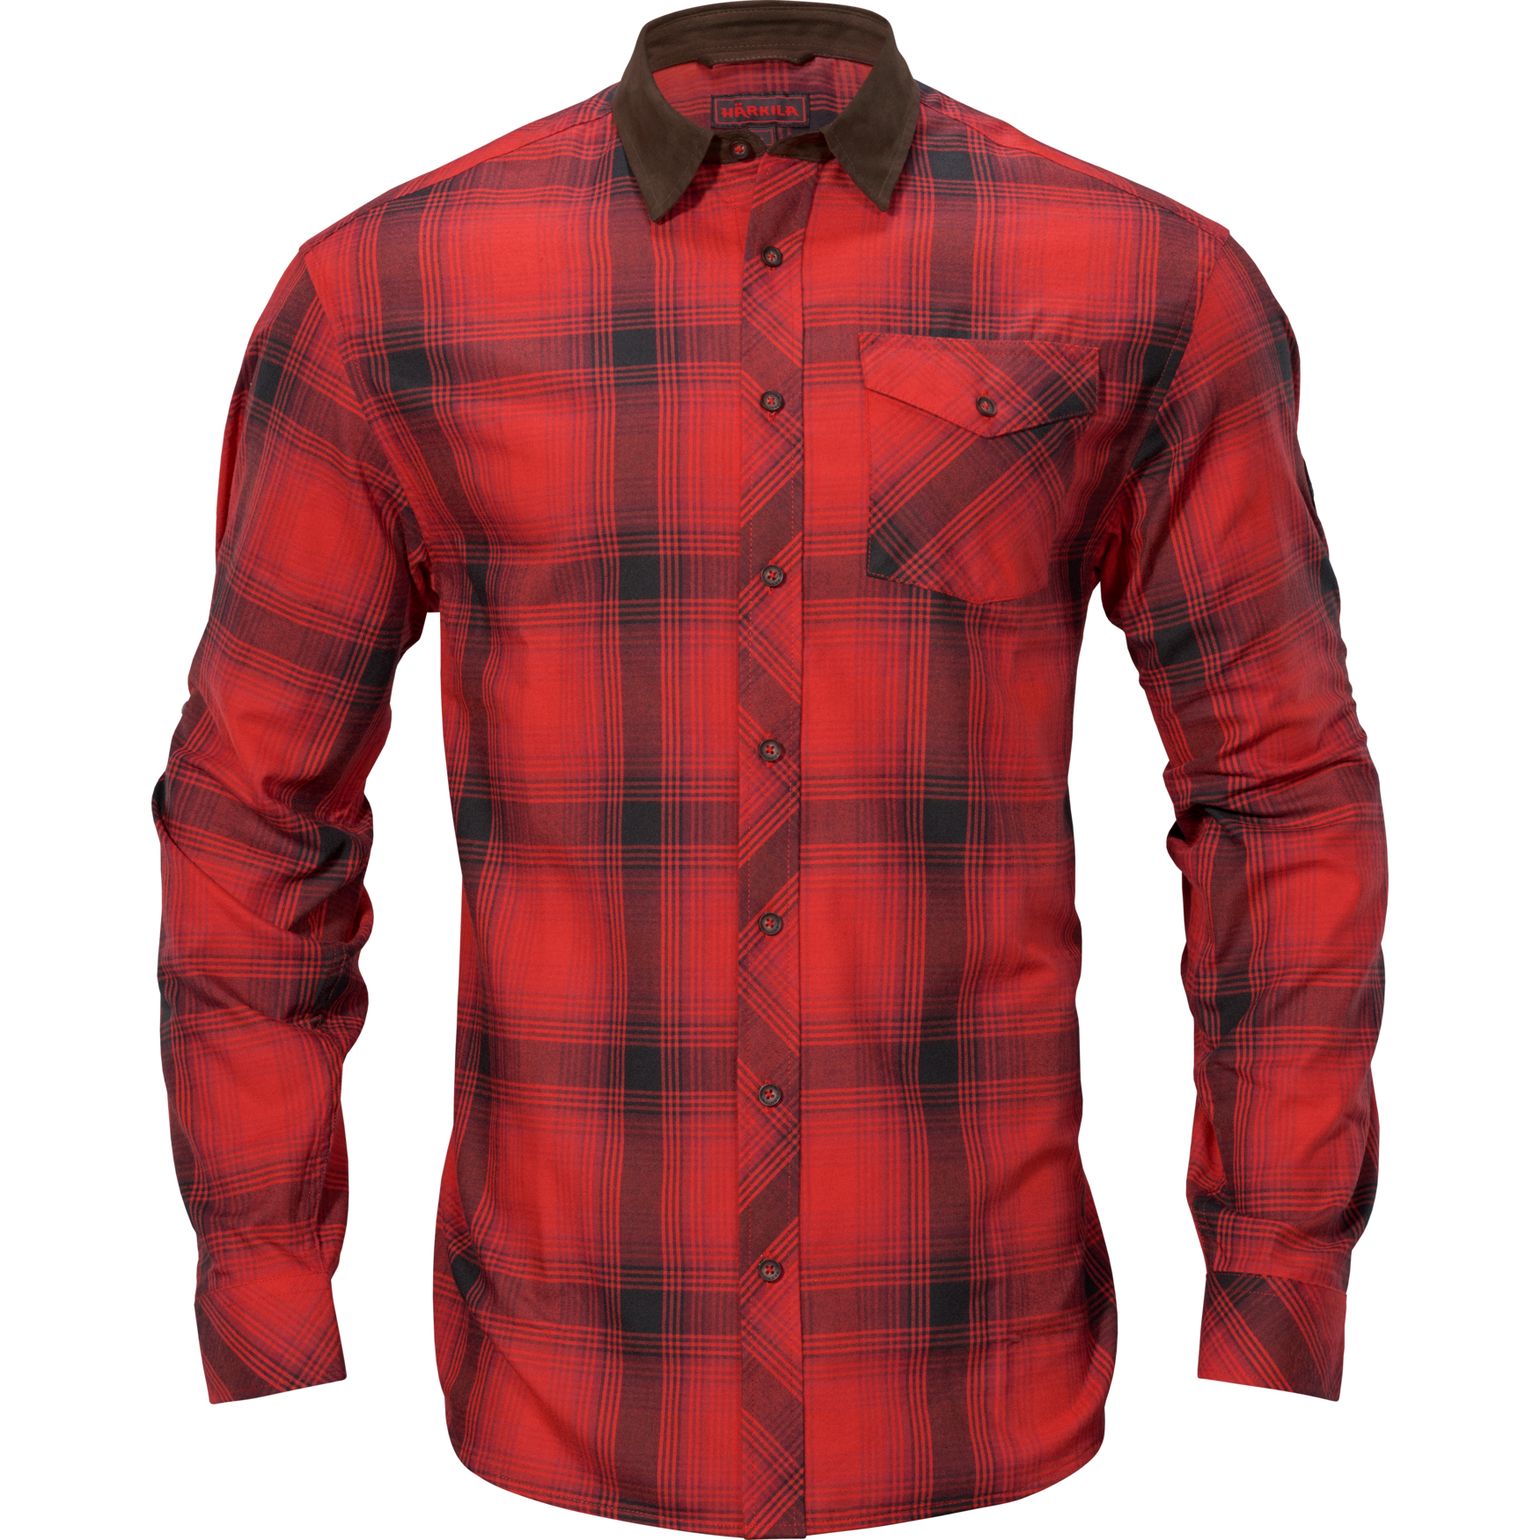 Men's Driven Hunt Flannel Shirt Red/Black check